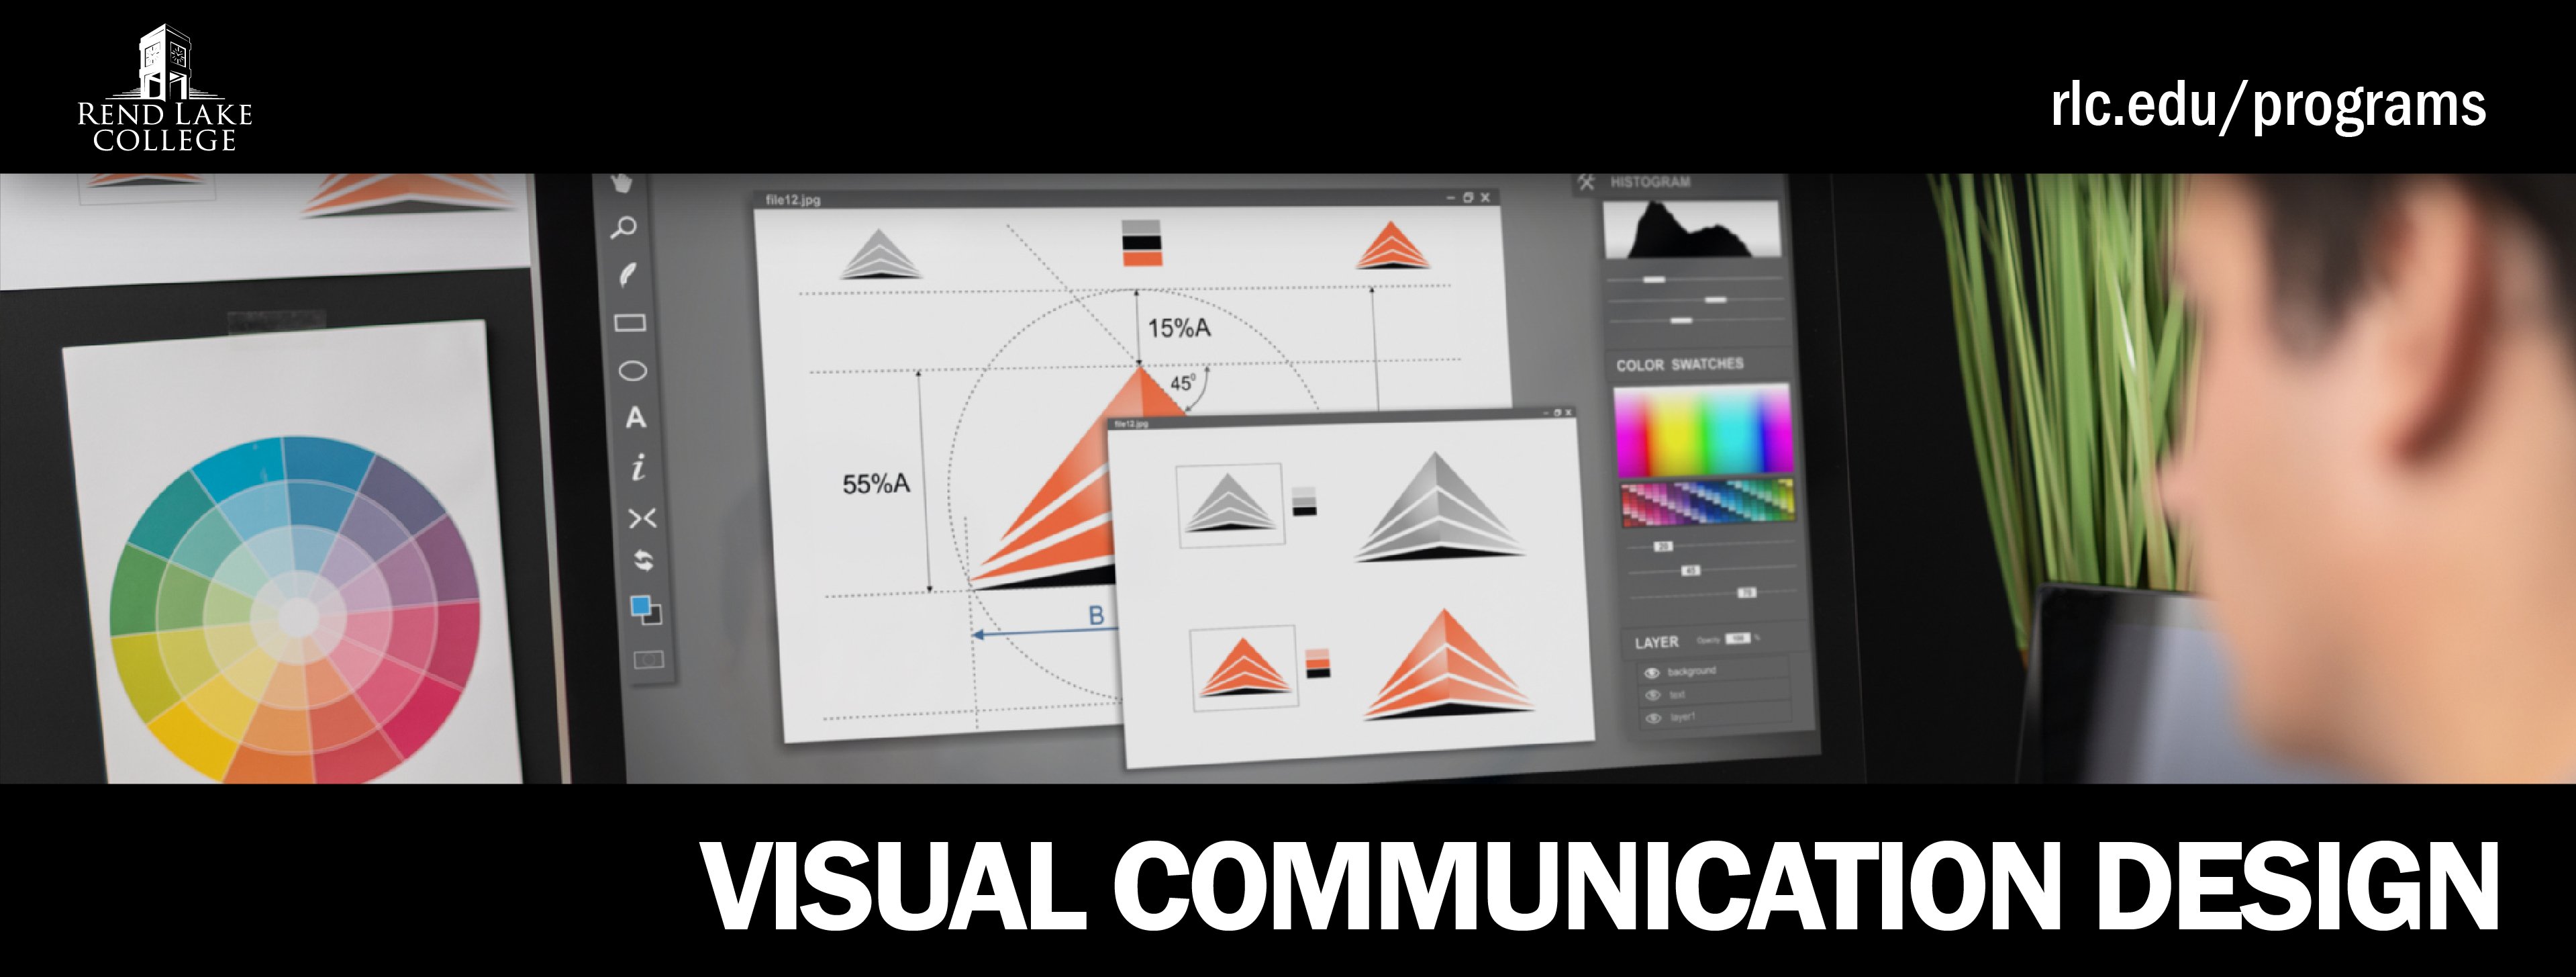 visual communication design main art